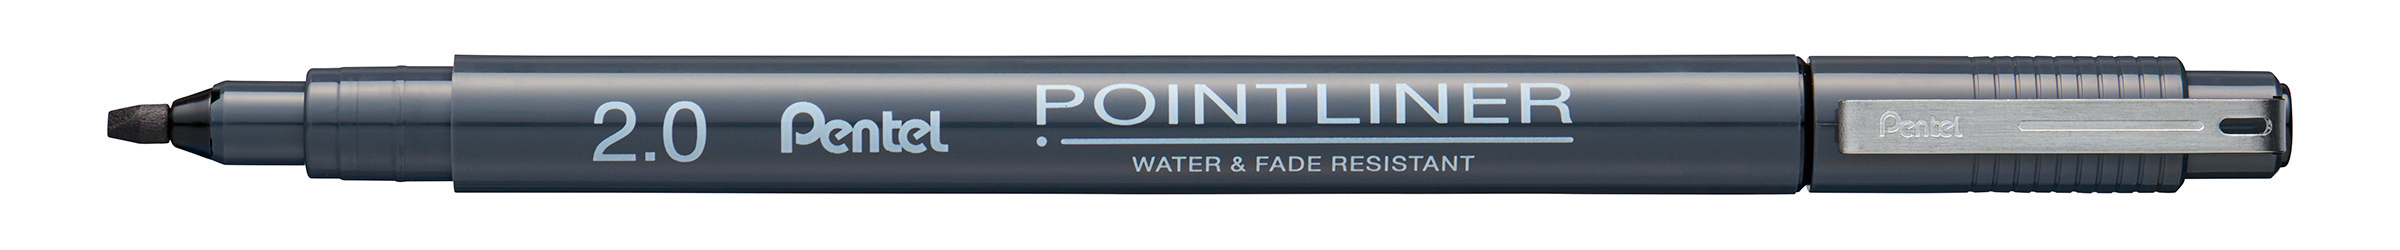 PENTEL Fineliner Pigment 2.0 mm S20P-C2A POINTLINER, noir